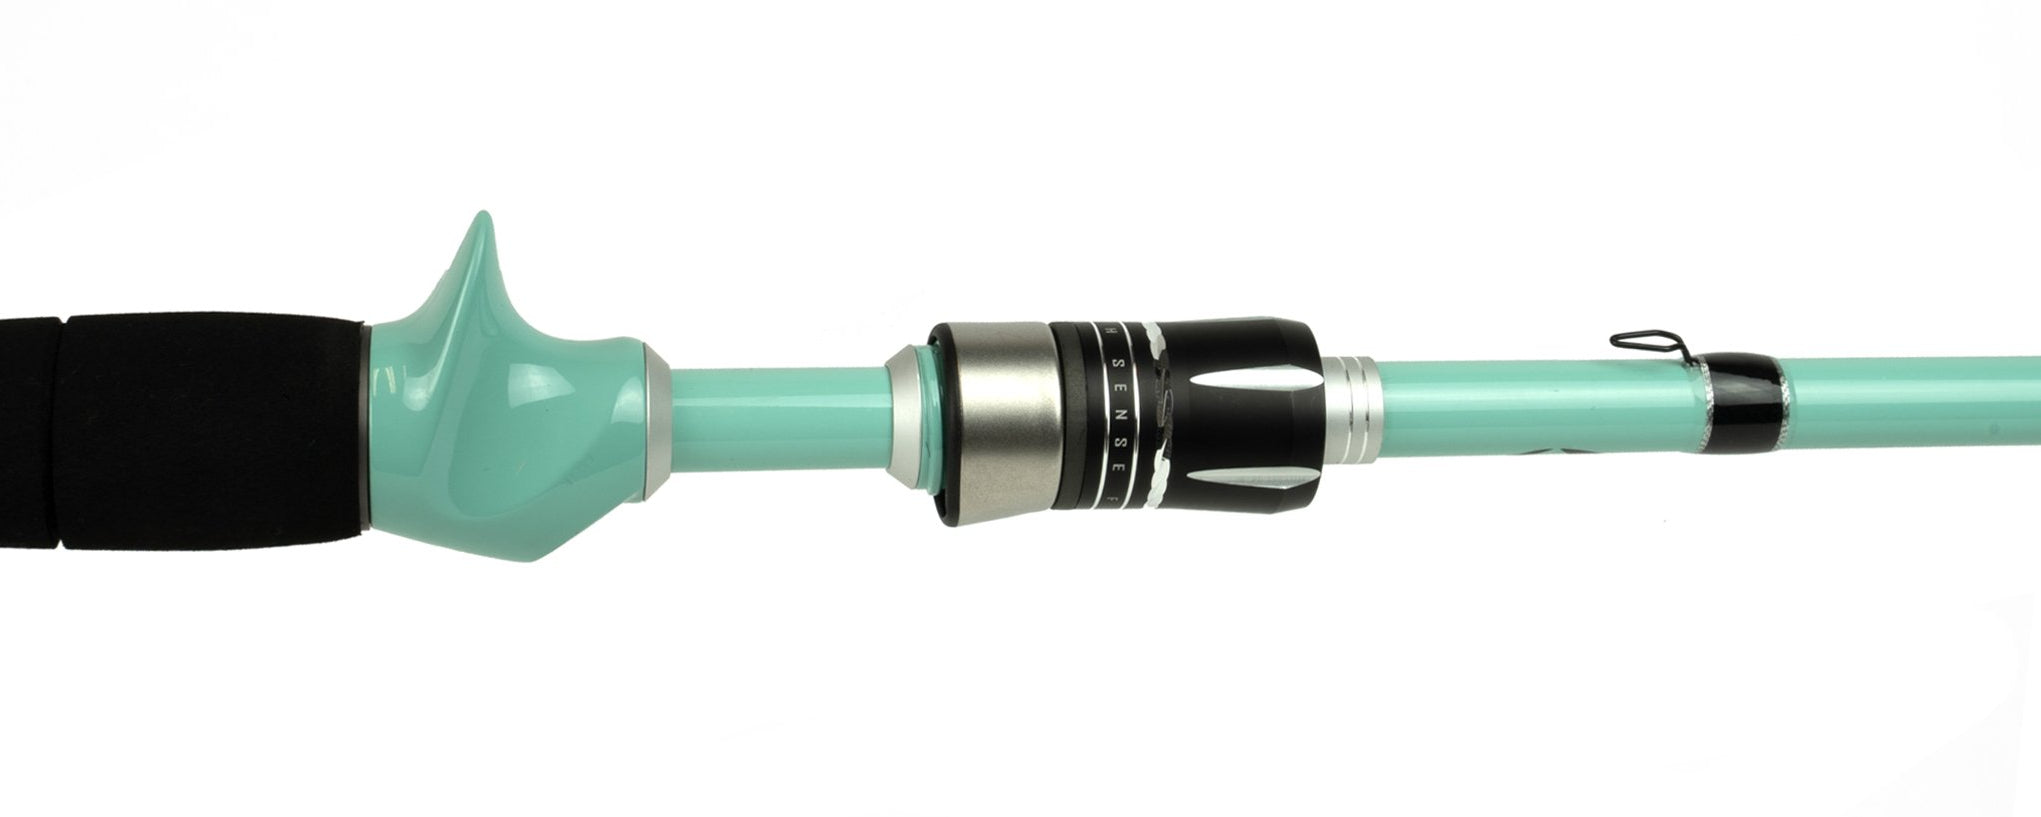 6th Sense Fishing - Rods - Sensory Casting Rod - 7'2 Med LT, Fast (Saltwater Edition)